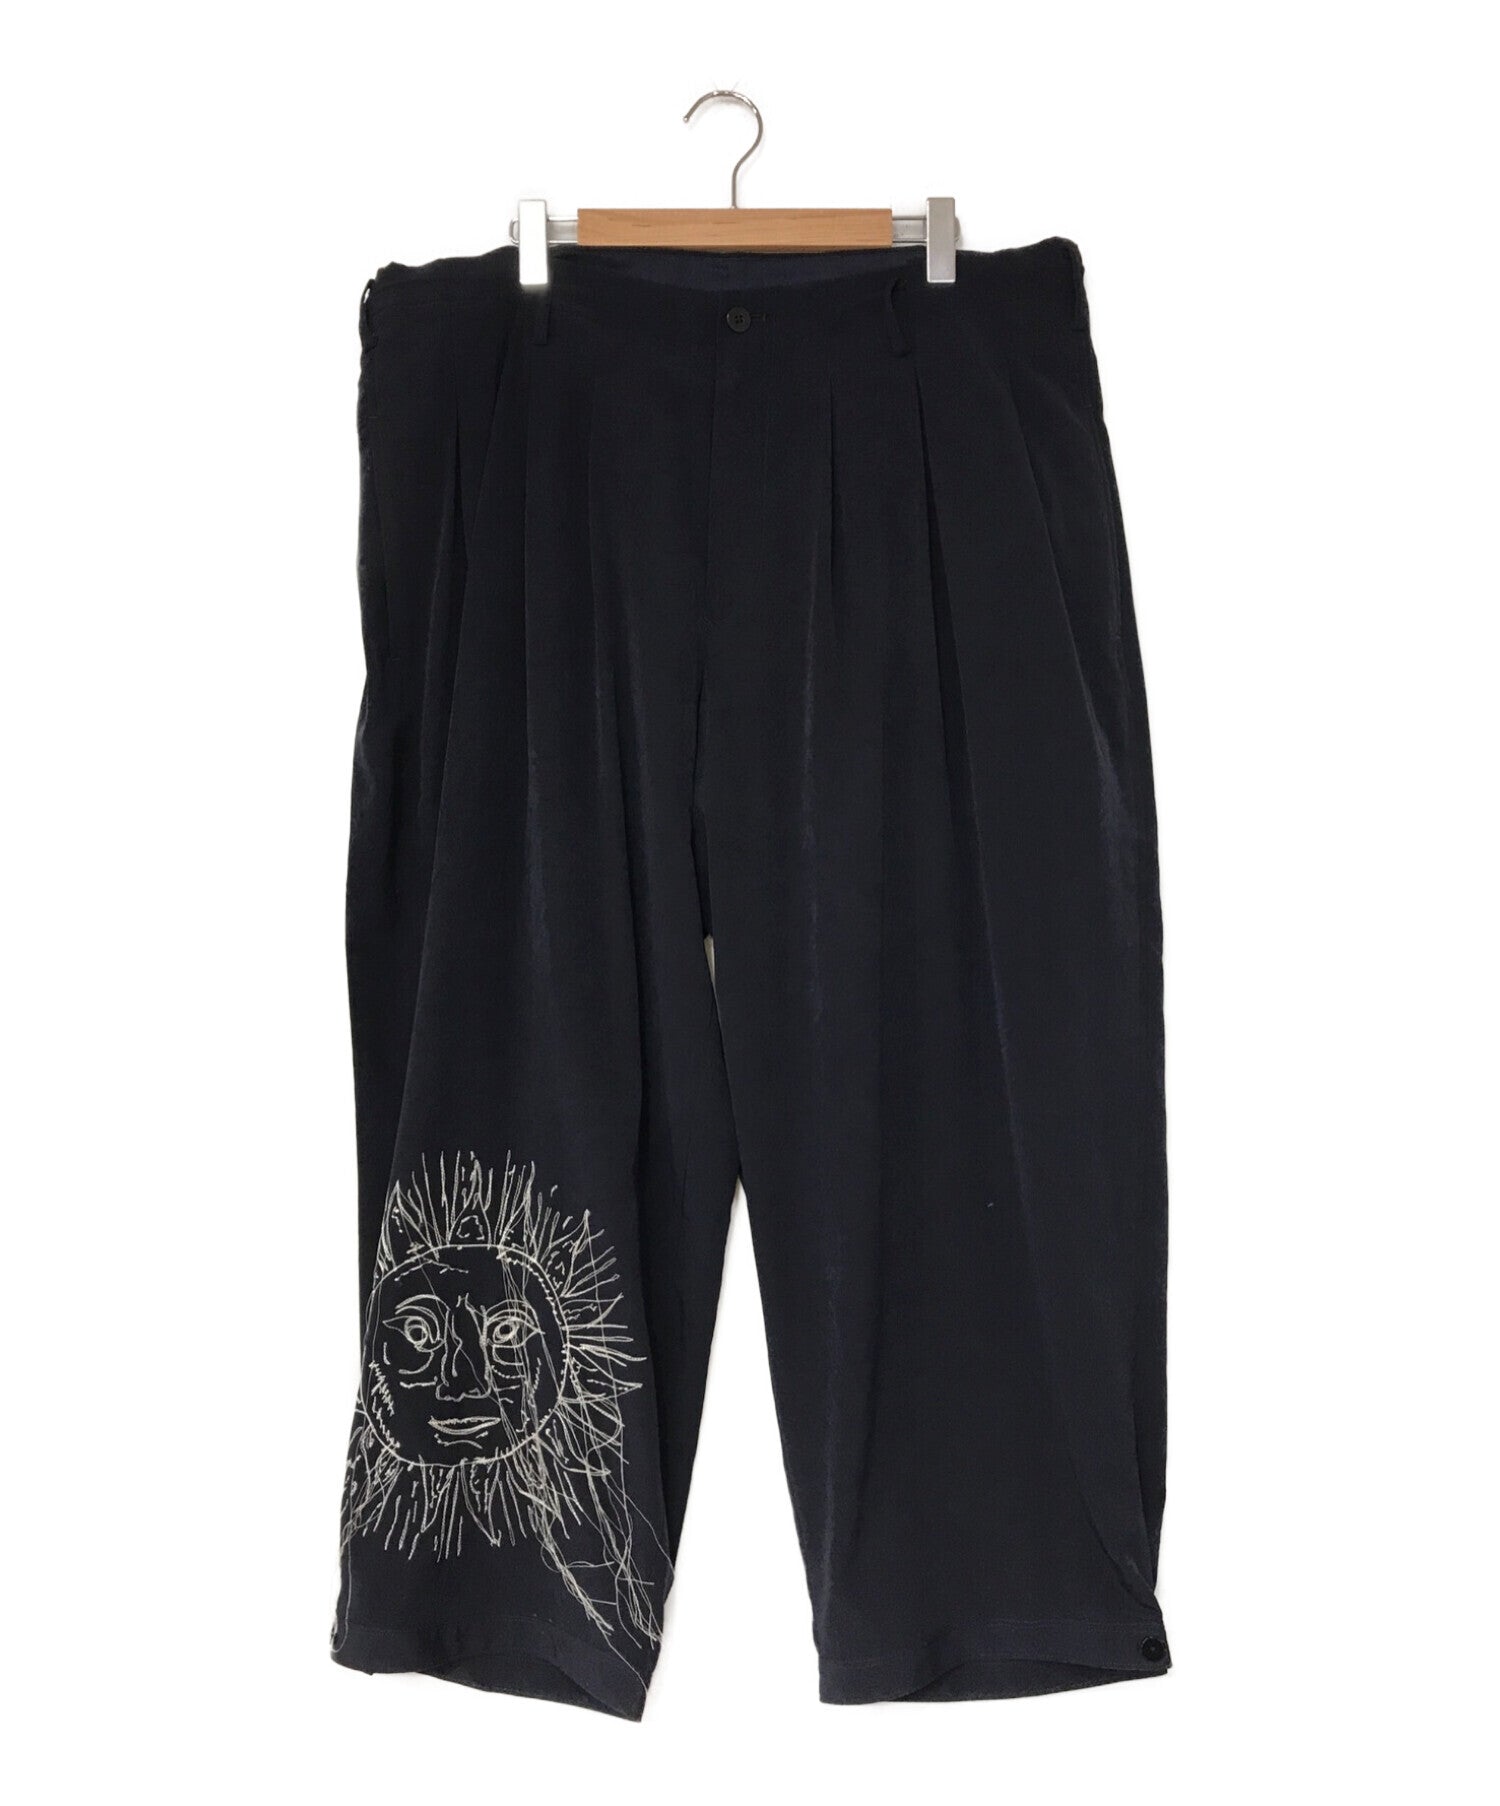 Yohji Yamamoto Spring 2023 Menswear Collection